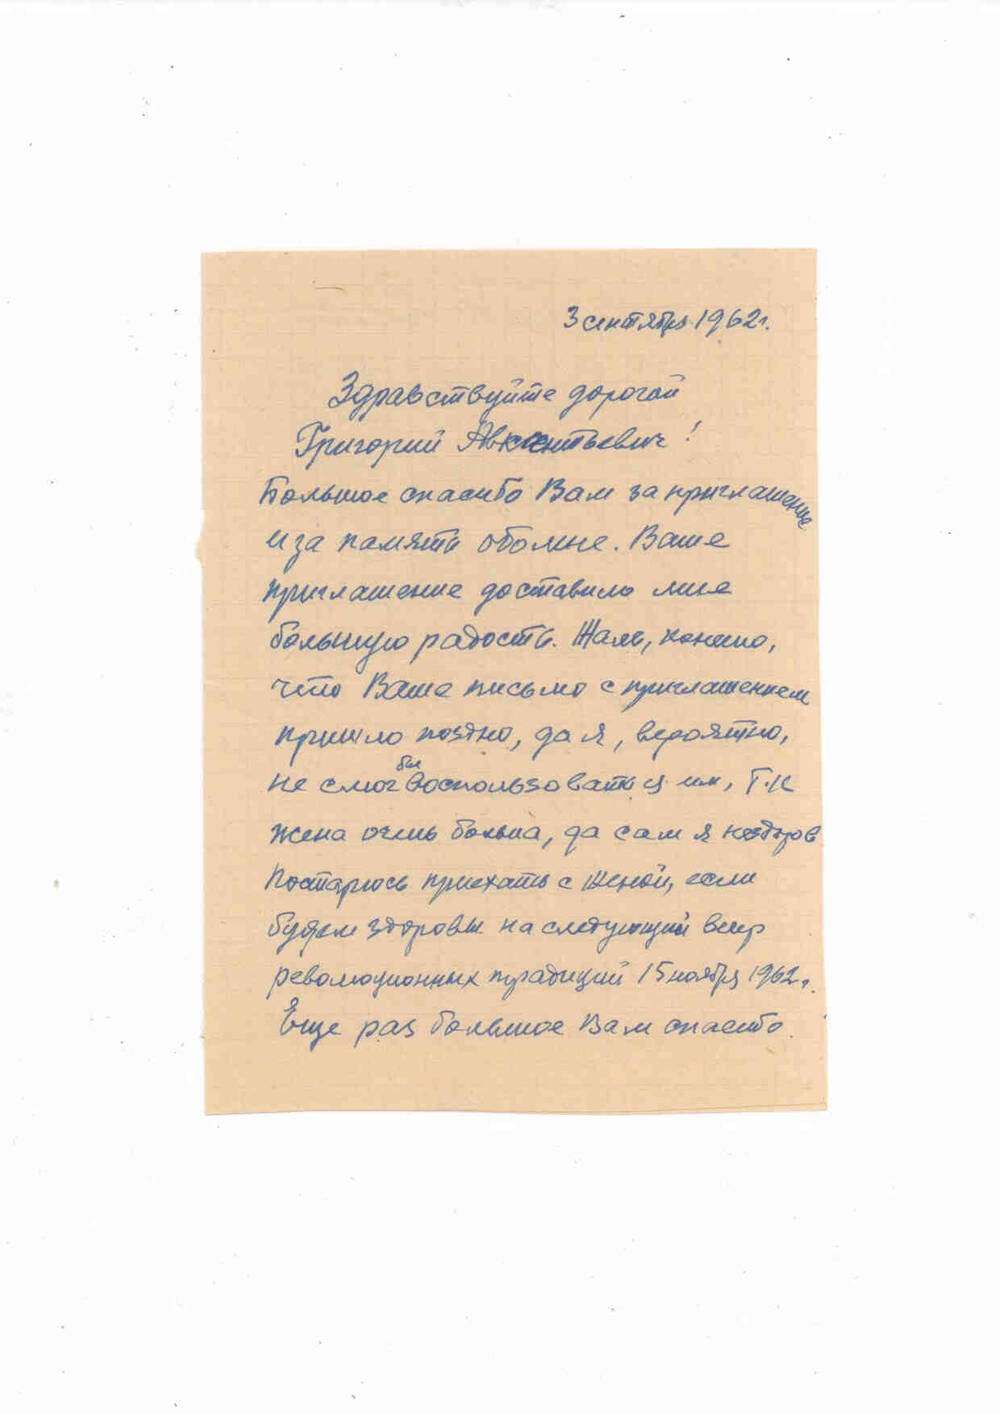 Письмо Дзекуну Г.А. от Рассола. 3 сентября 1962 г.